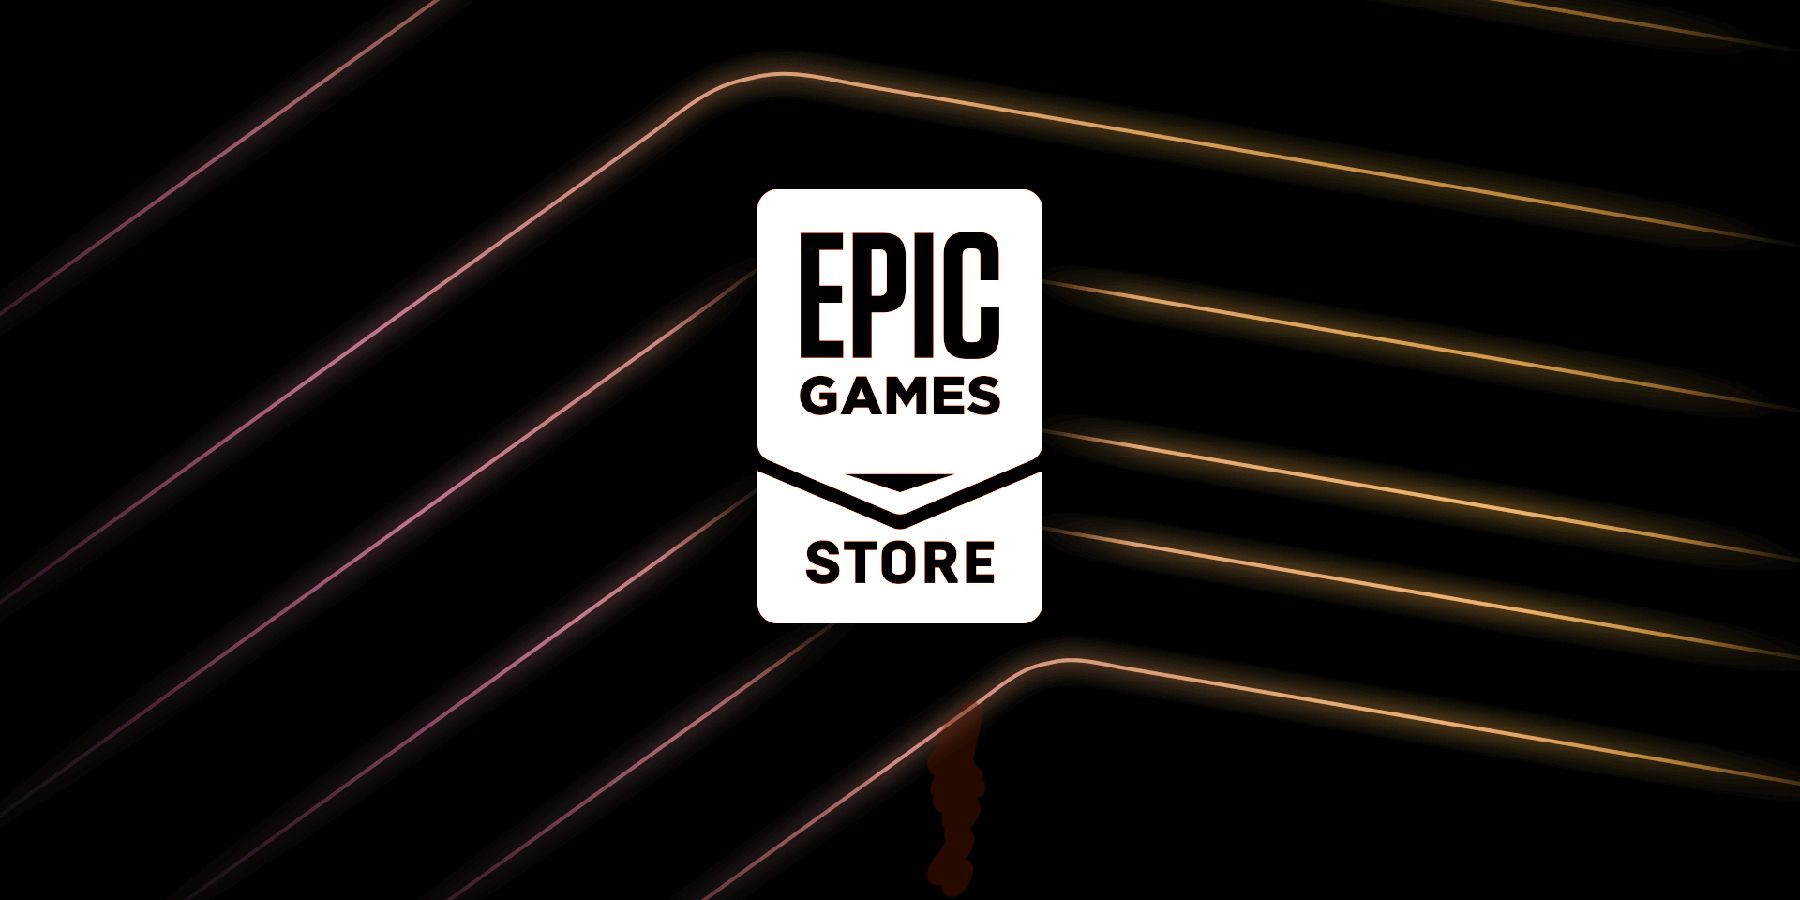 epic games store hot streak